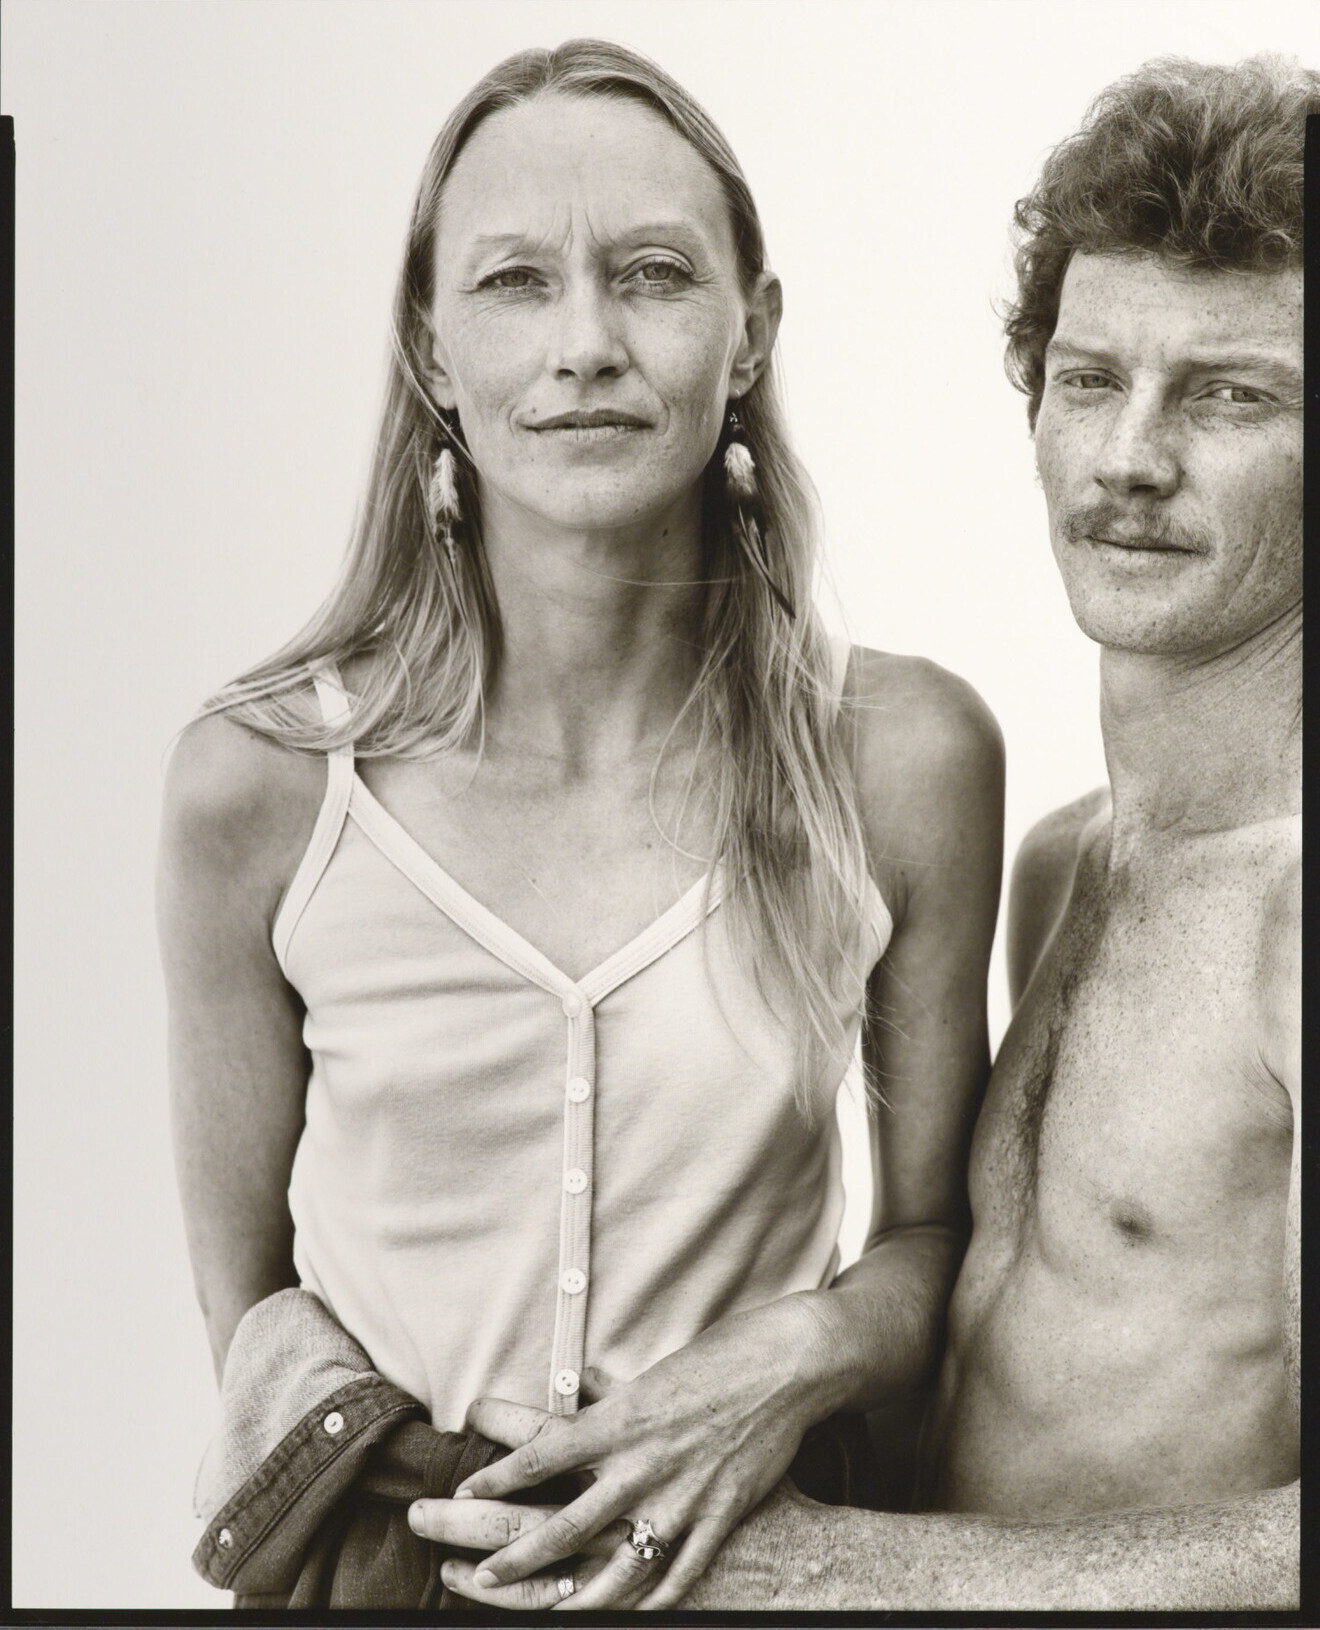 Джанет Тоблер, домохозяйка и ее муж Рэнди, изолятор, Гленрок, Вайоминг, 1983 г. Фотограф Ричард Аведон